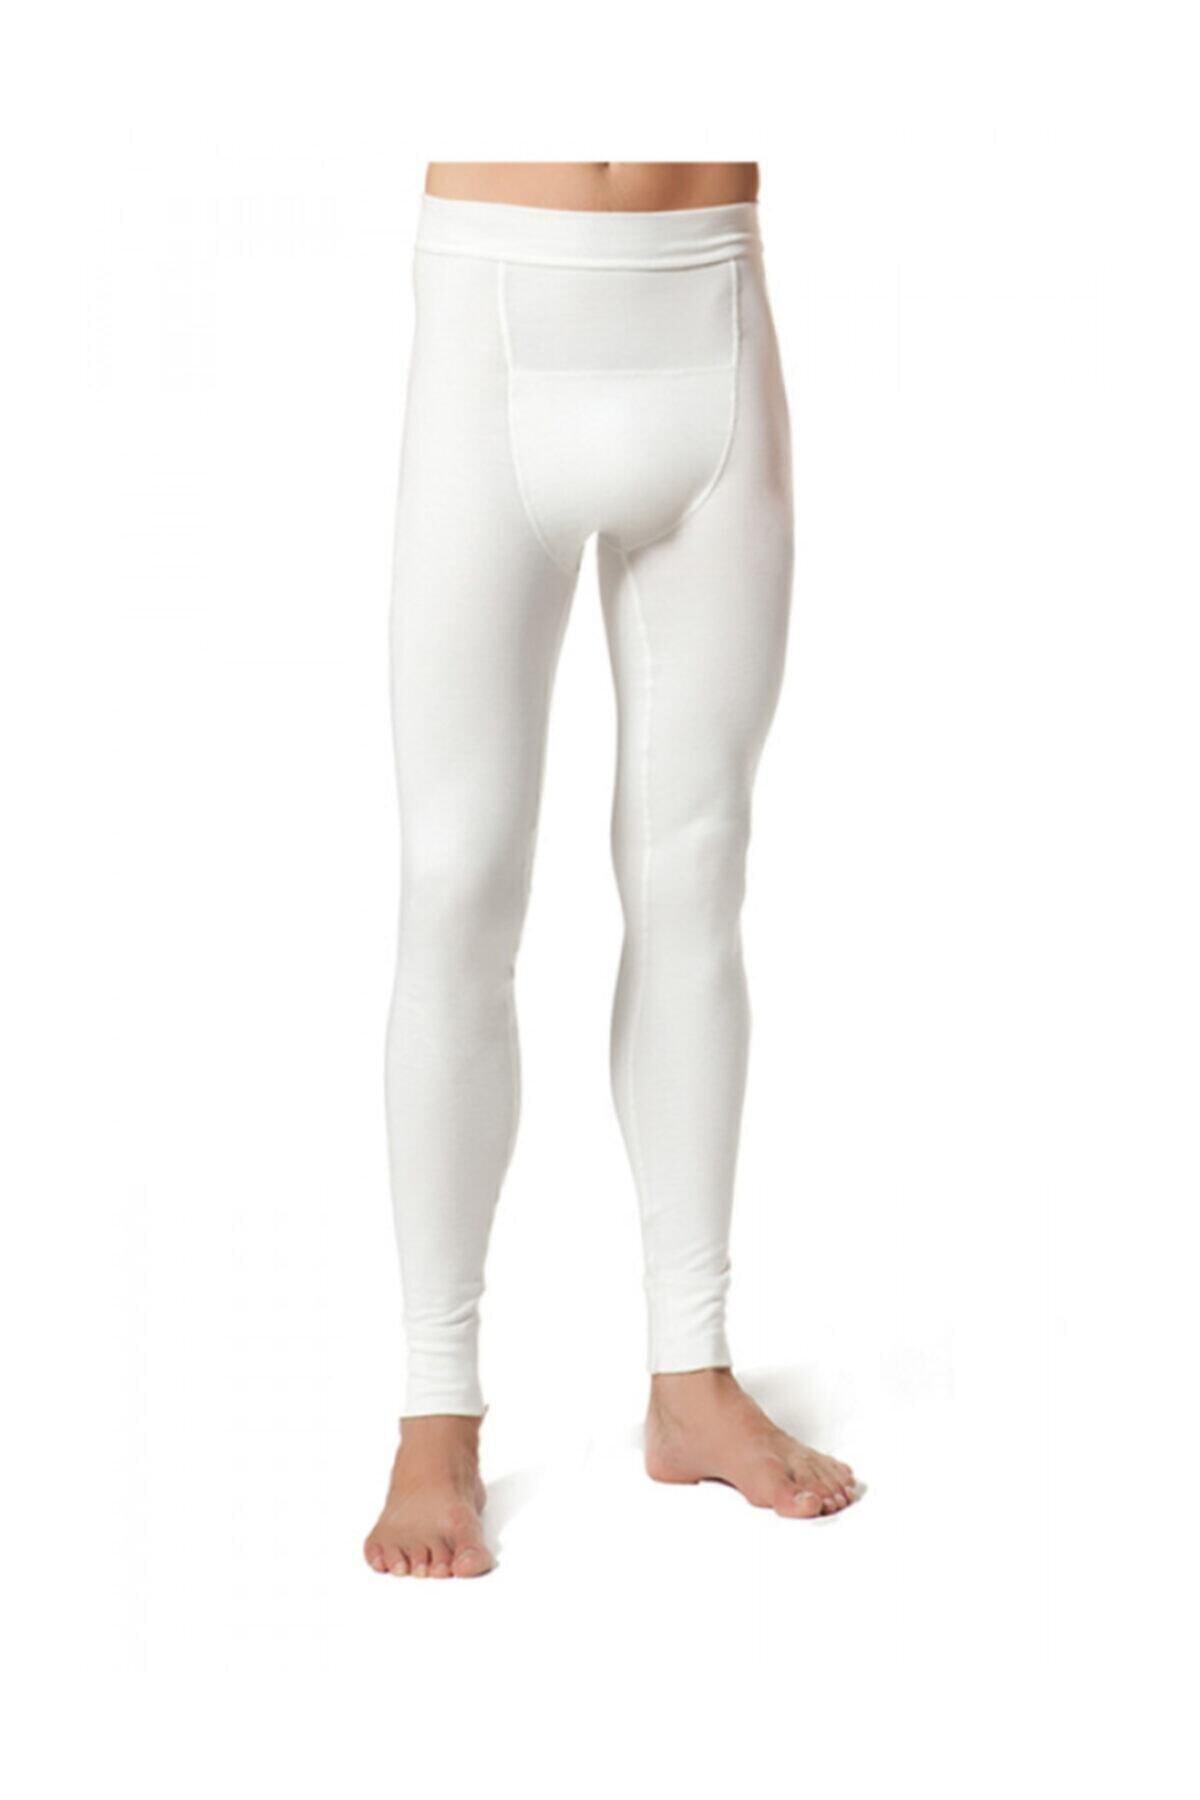 Dagi - White Thermal Underwear Bottom